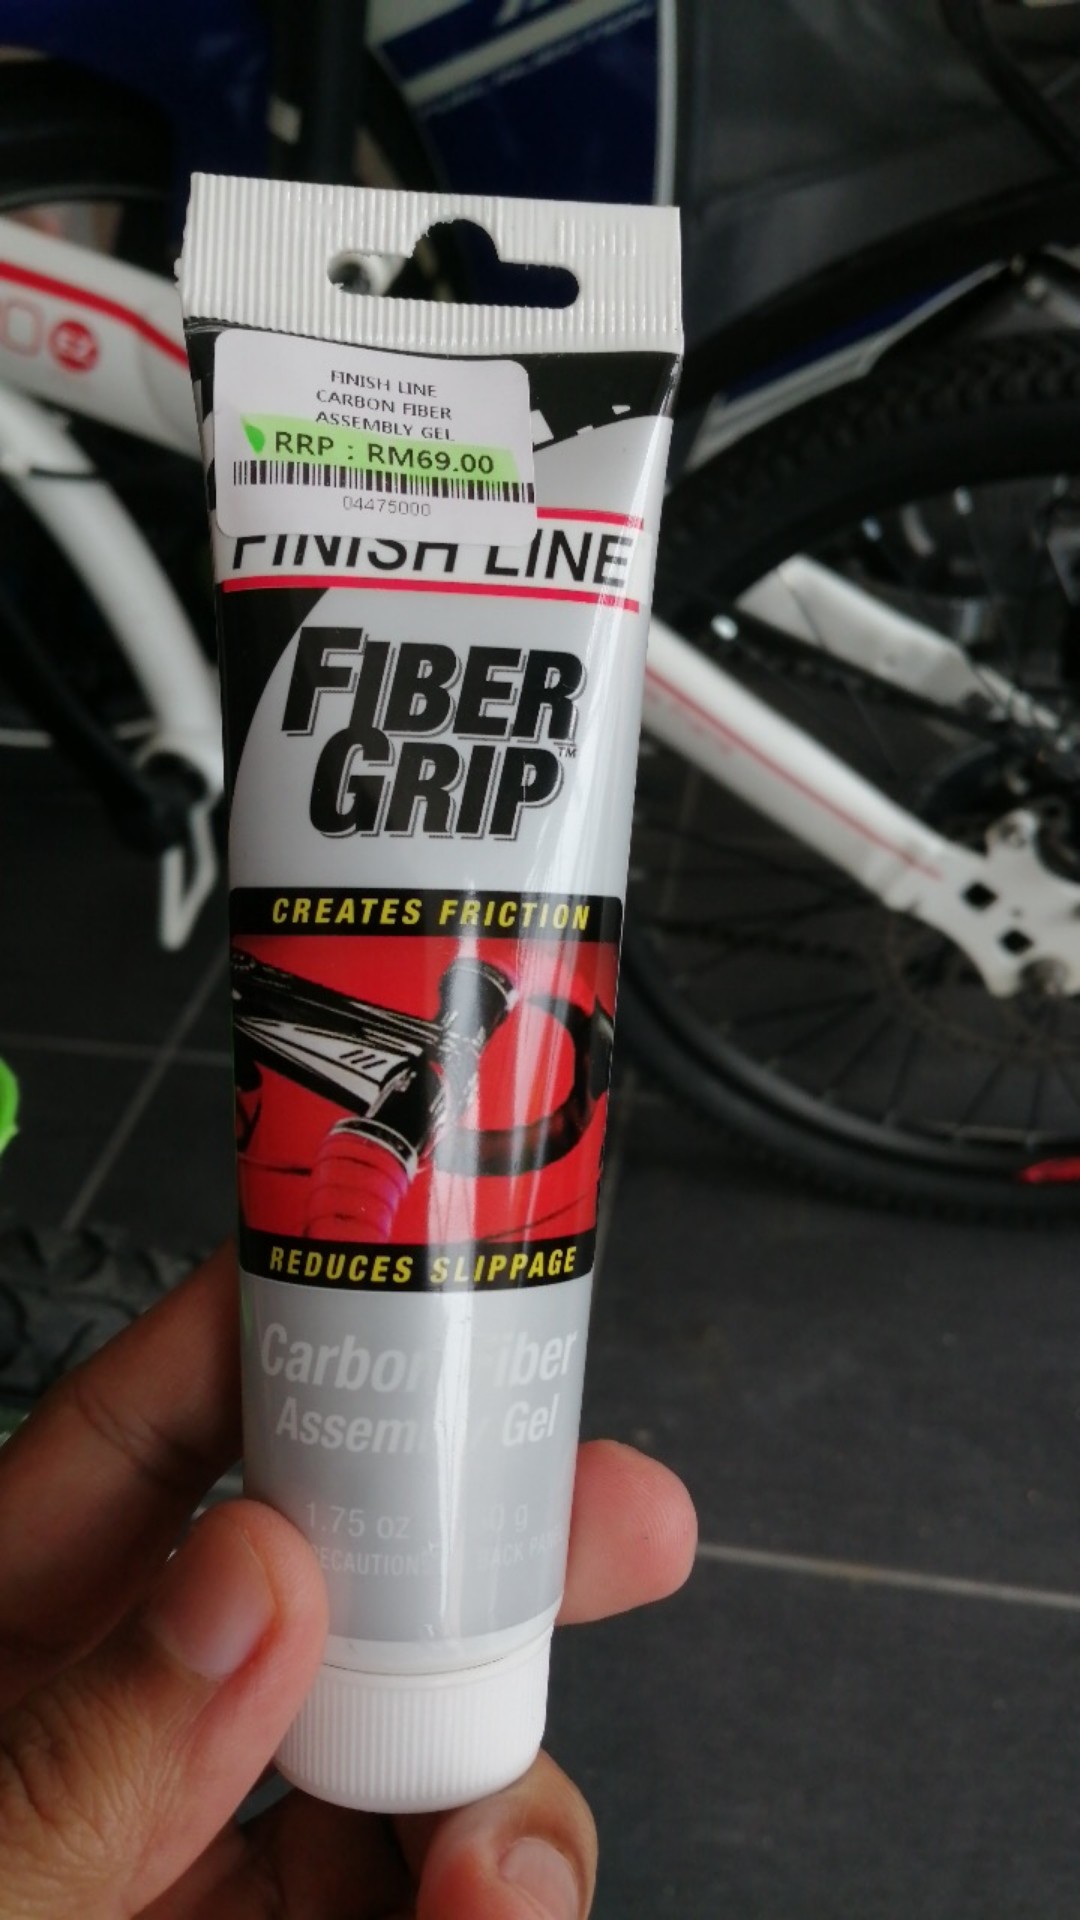 finish line fiber grip